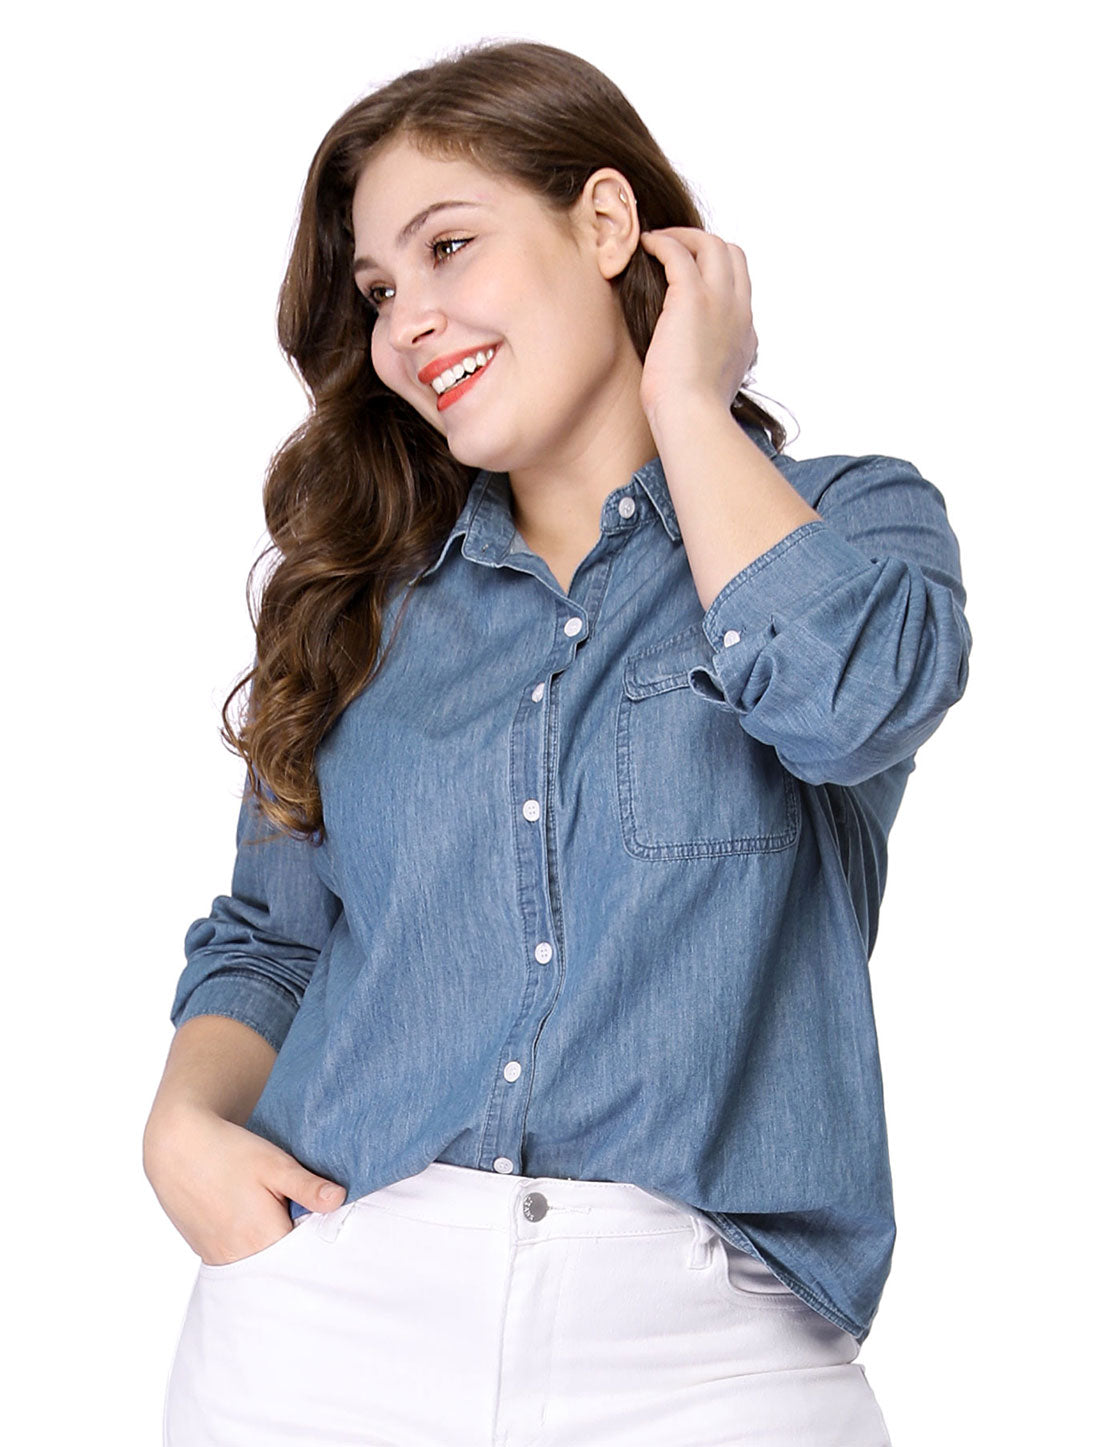 Bublédon Women's Plus Size Long Sleeve Chest Pocket Chambray Shirt